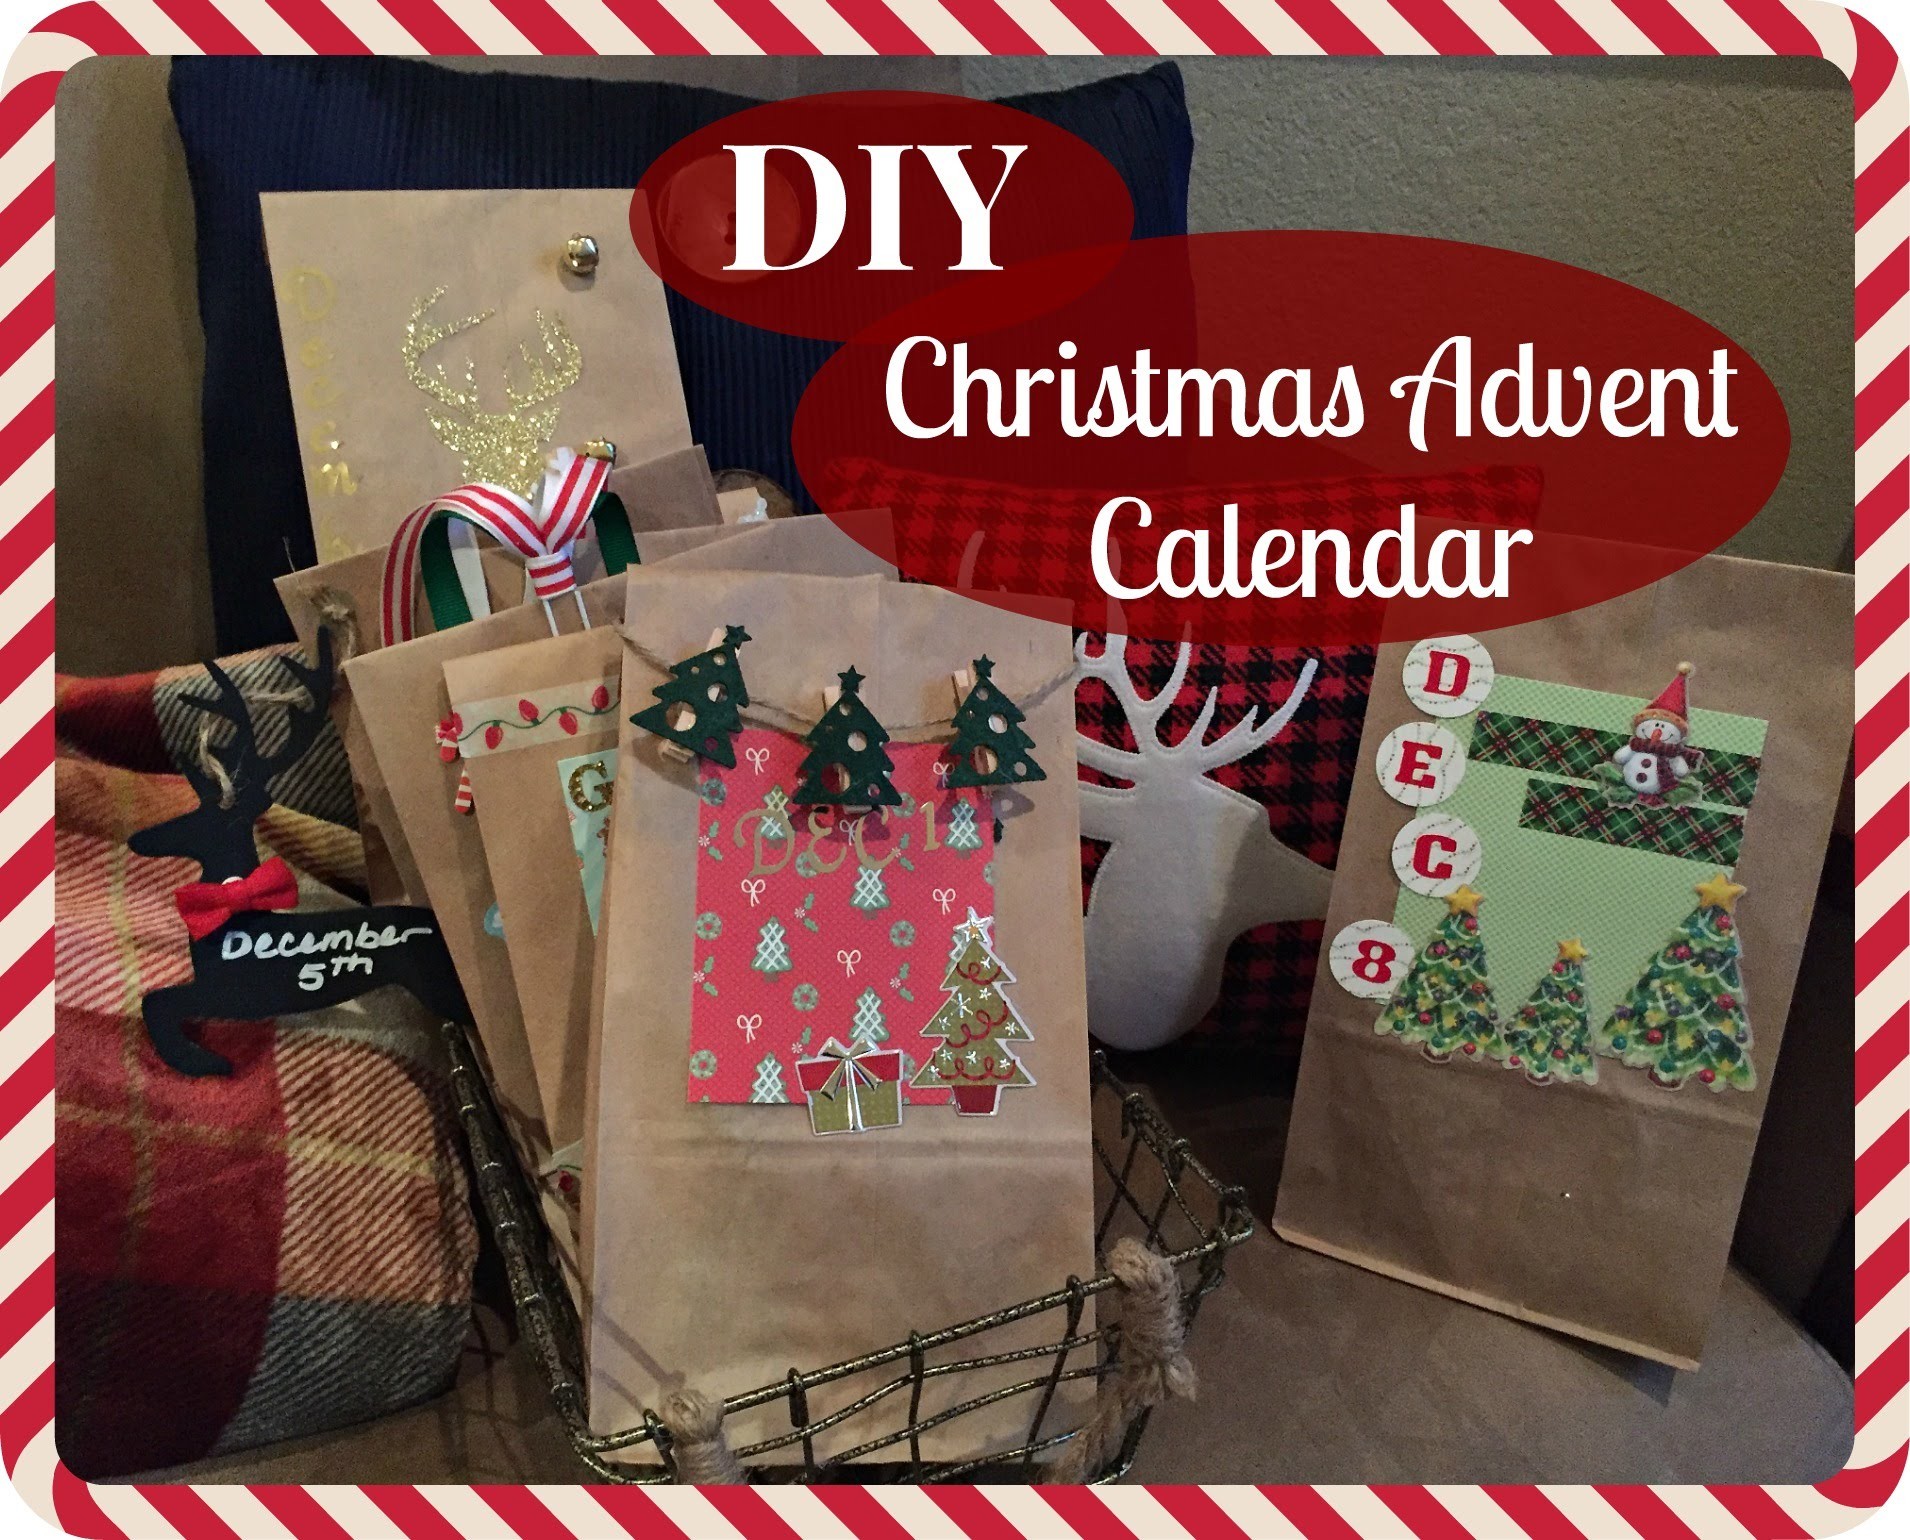 DIY Christmas Advent Calendar! DOLLAR TREE | TARGET DOLLAR SPOT | Days 1-8